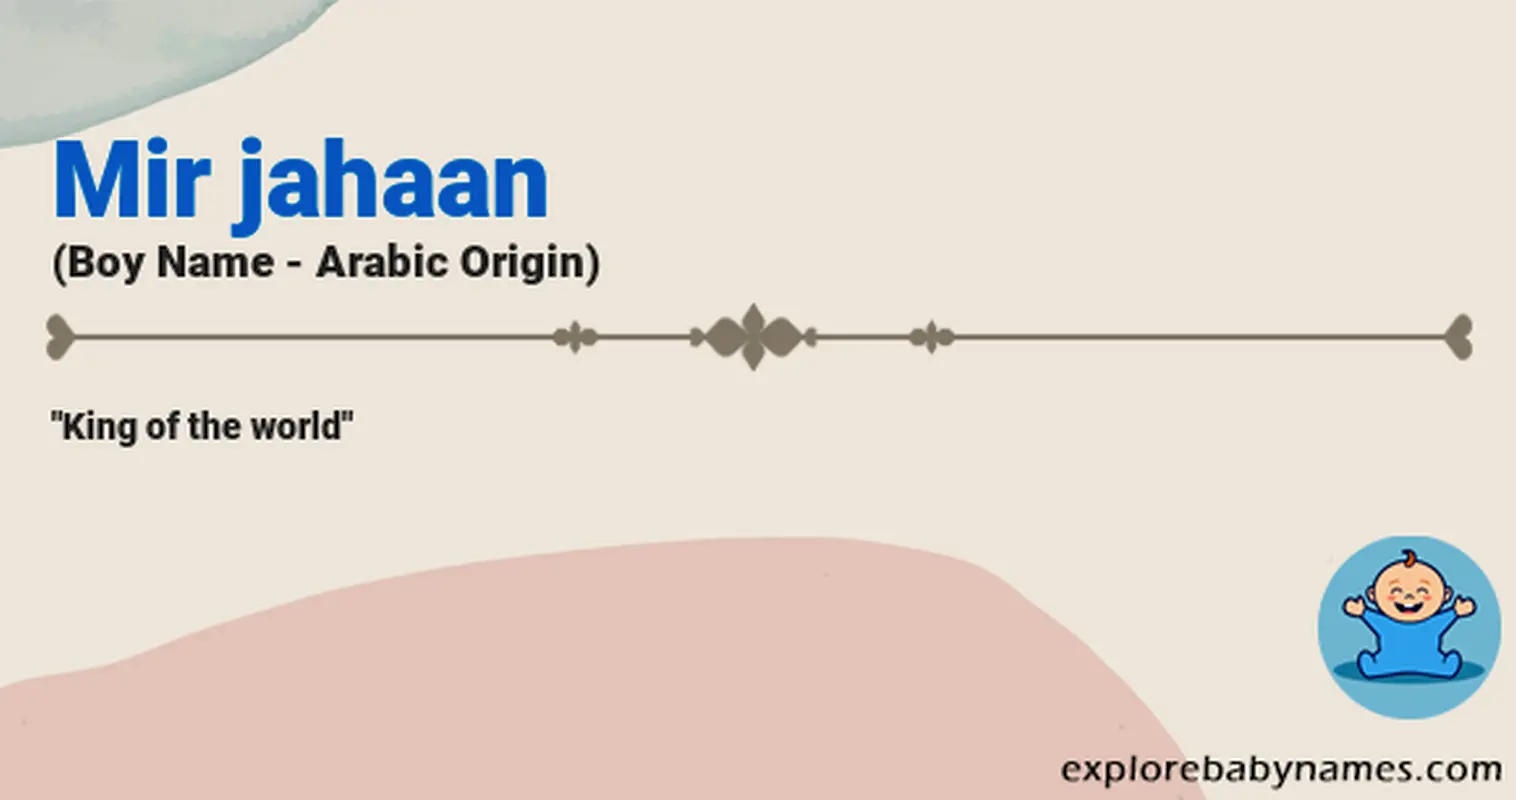 Meaning of Mir jahaan